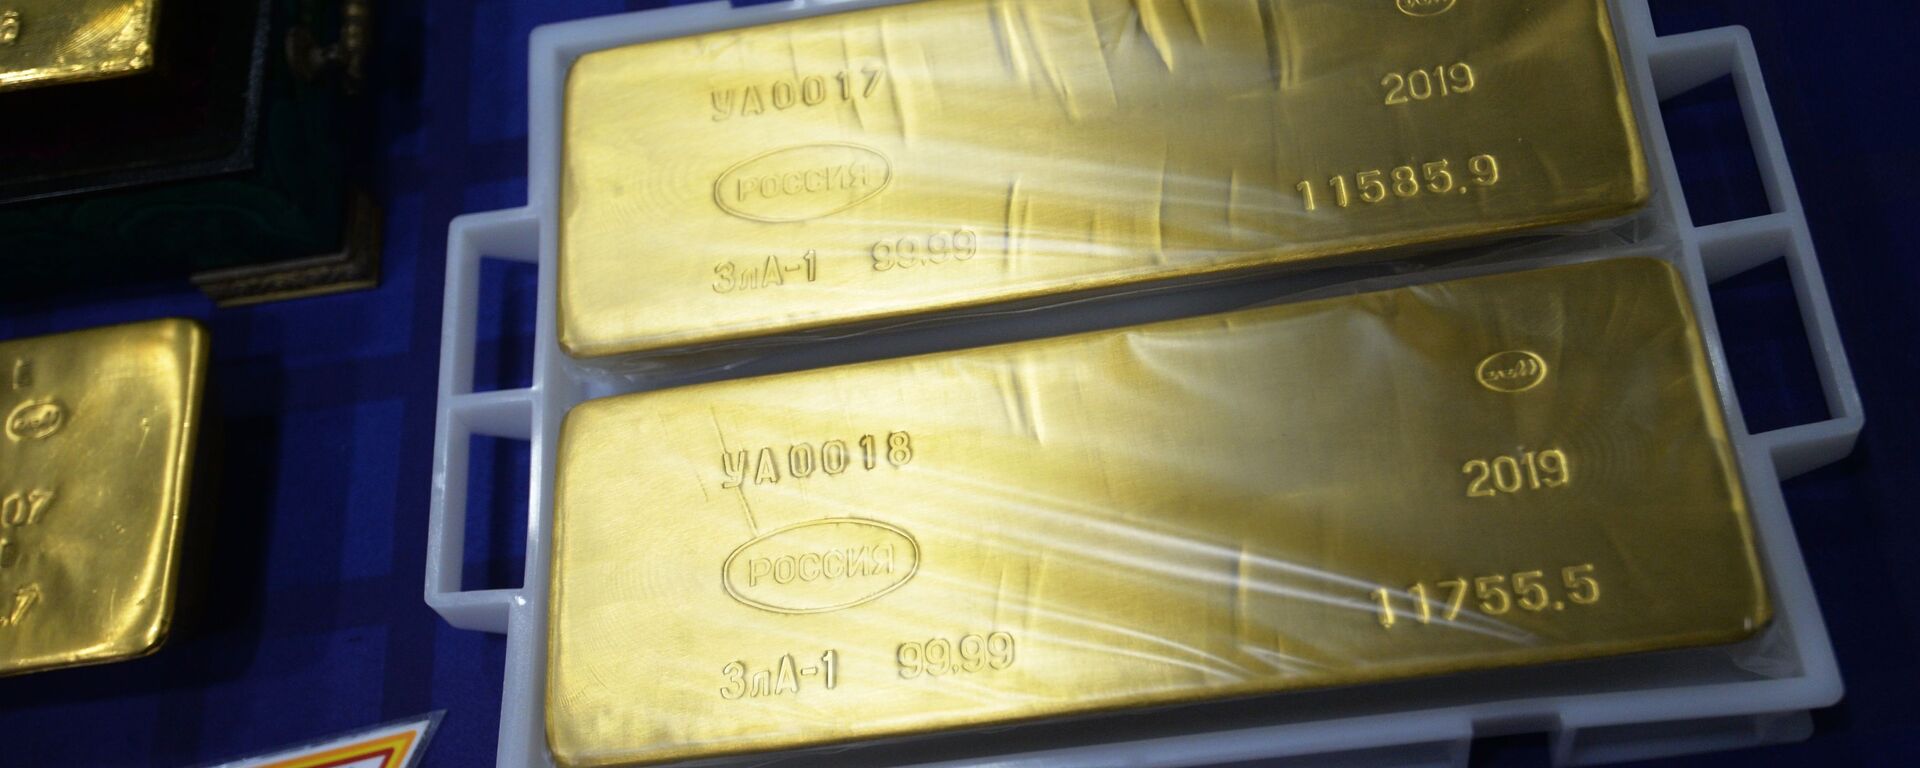 Gold Produced in Russia - Sputnik International, 1920, 02.08.2019